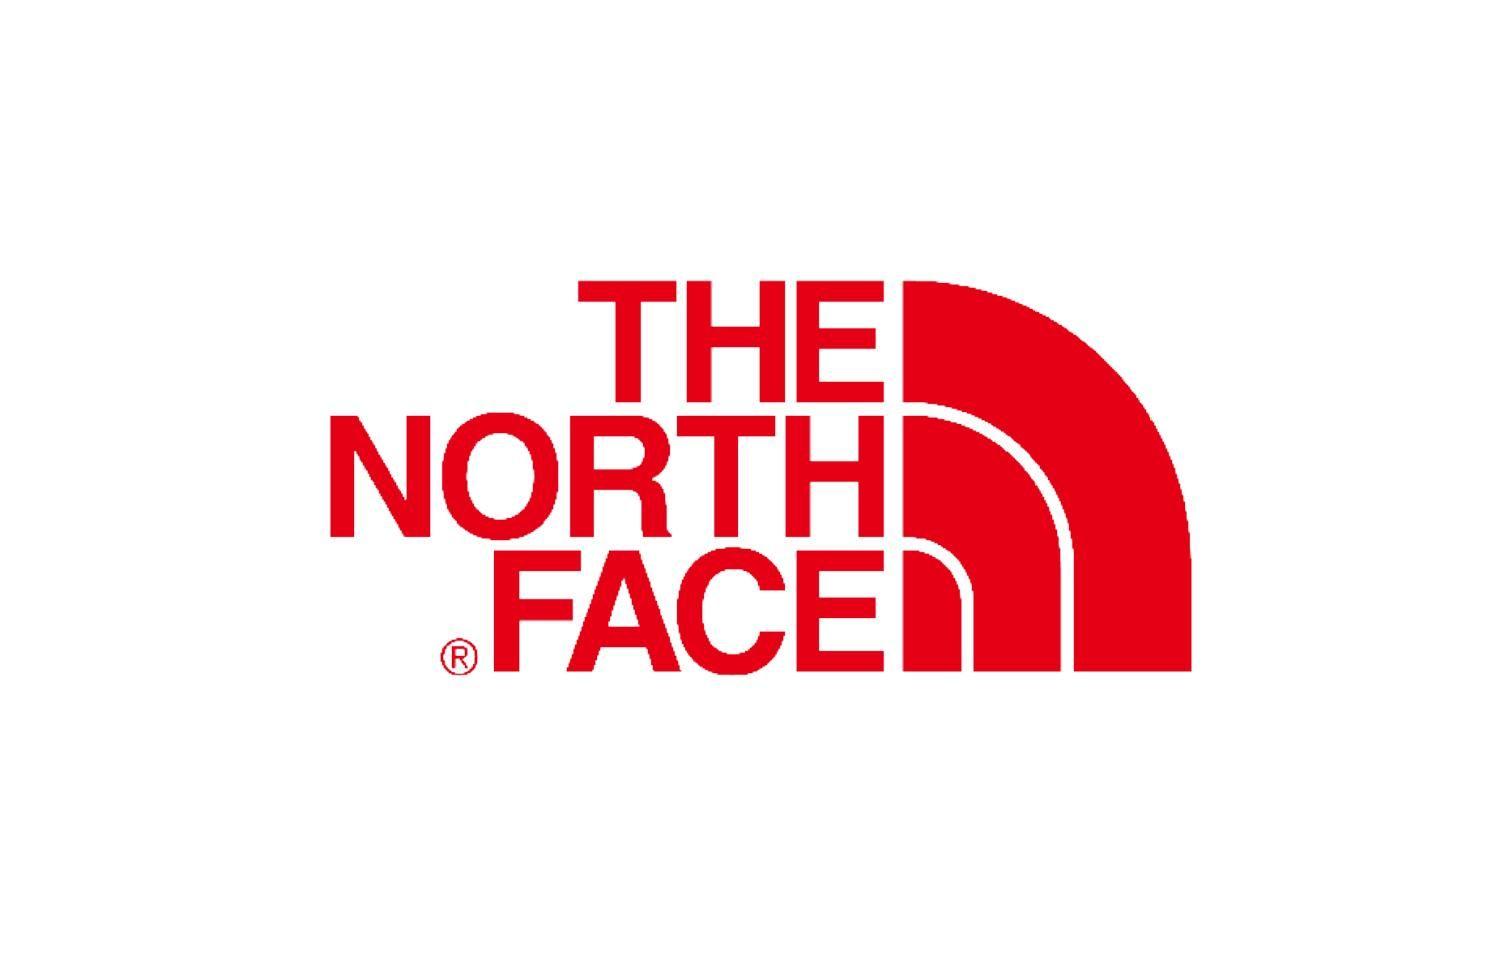 Red Face Logo - The North Face BrandBook by Lukasz Kulakowski - issuu